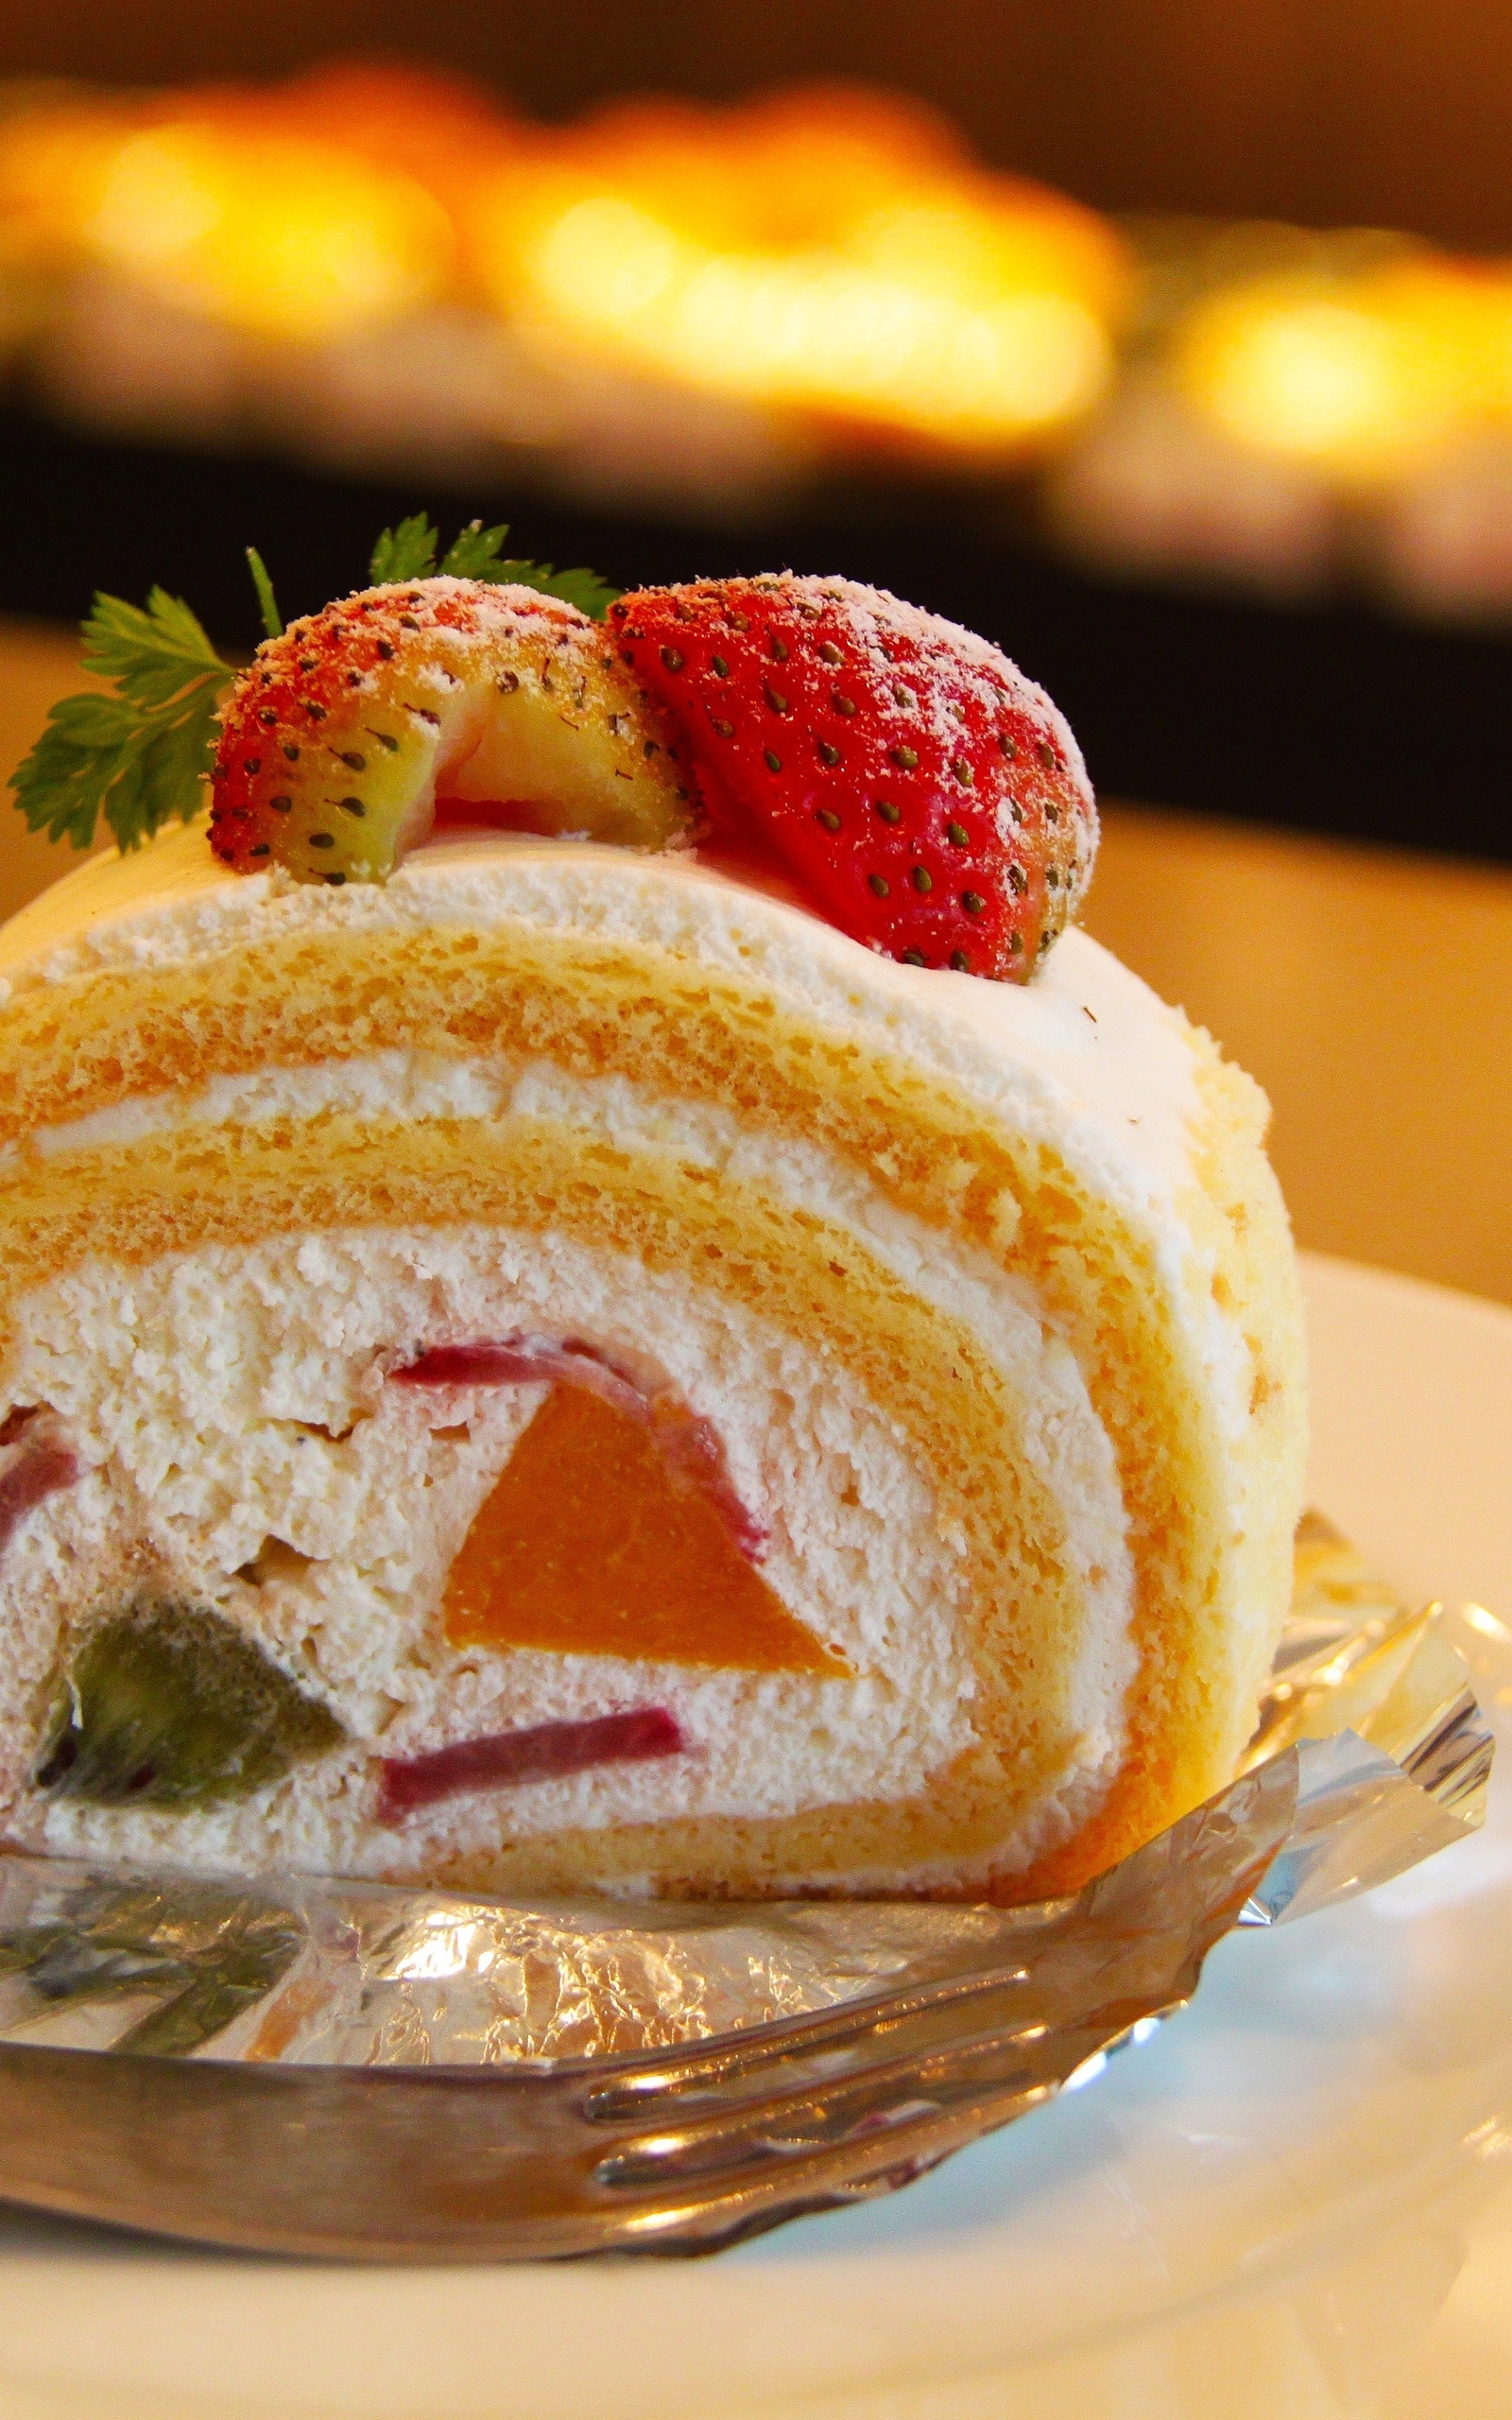 Image: Roll, dessert, berries, strawberry, cream, sweet